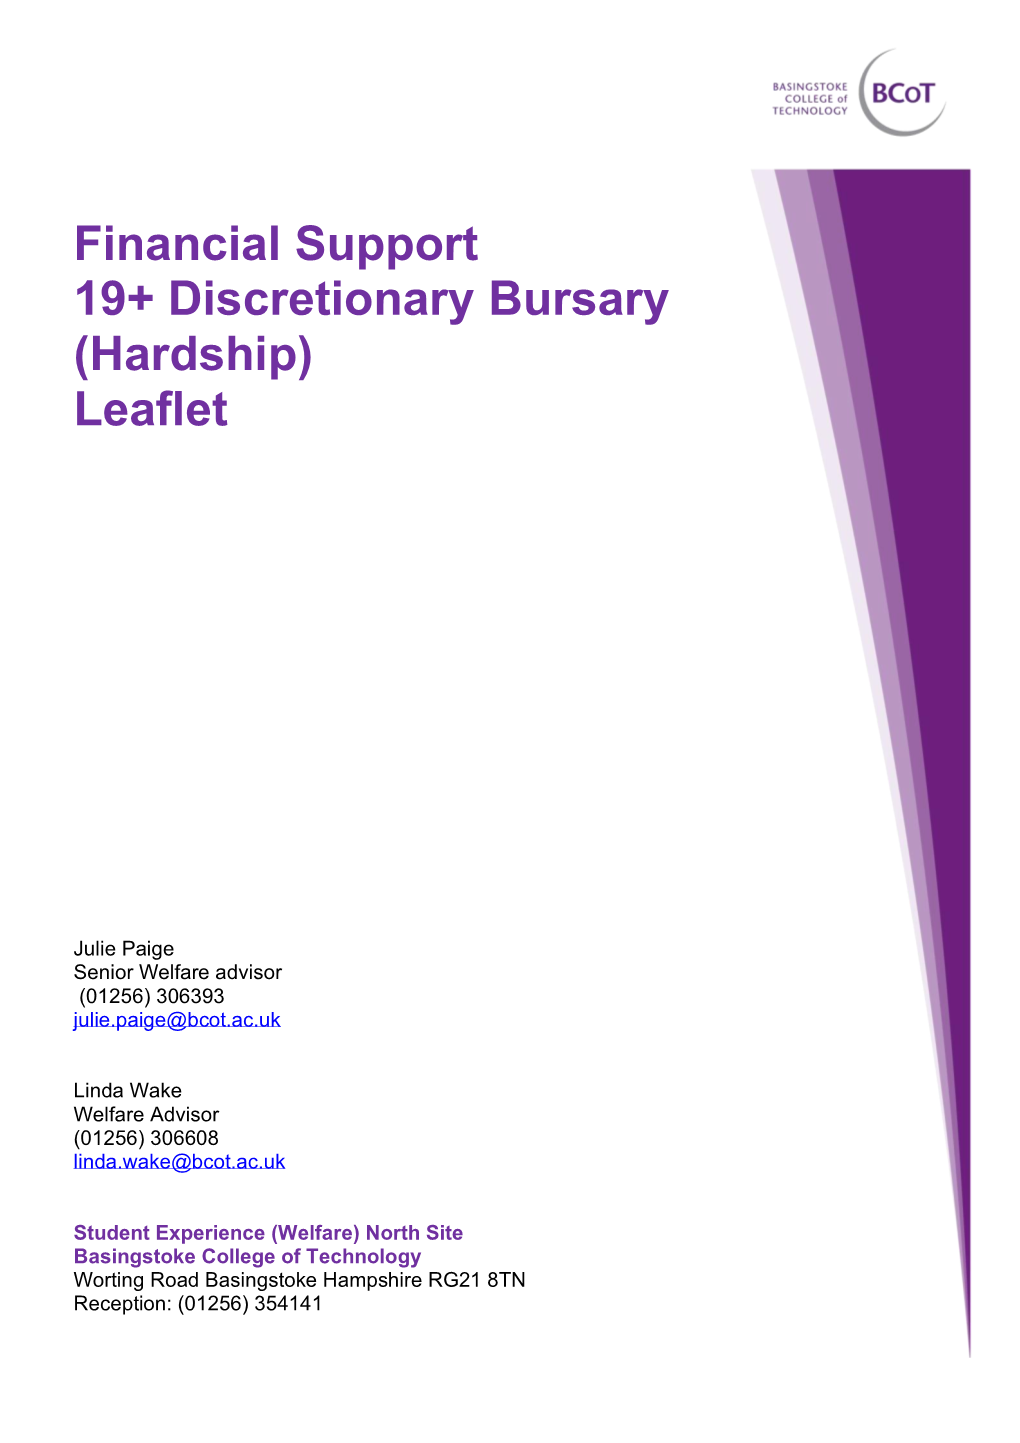 Financial Support 19+ Discretionary Bursary (Hardship) Leaflet